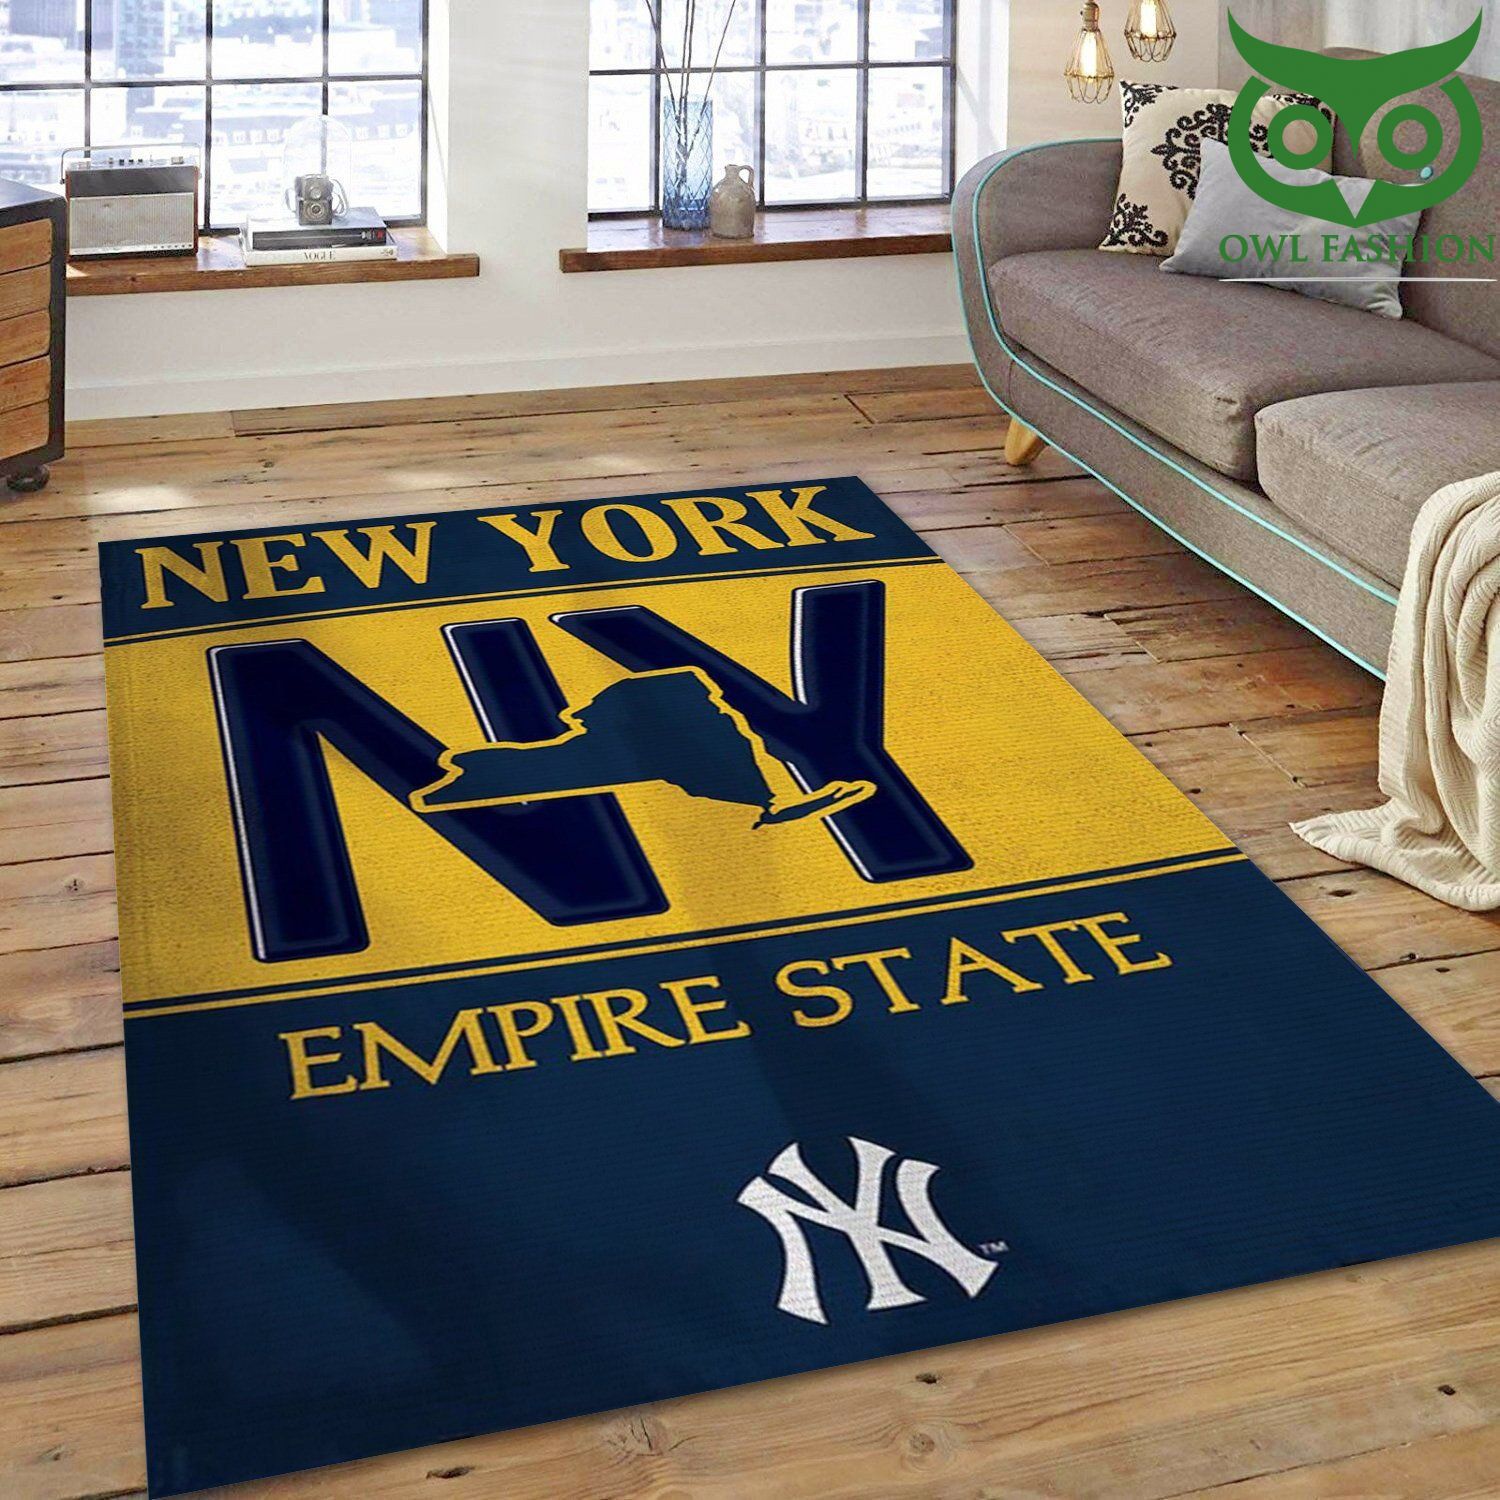 New York Yankees MLB carpet rug special edition